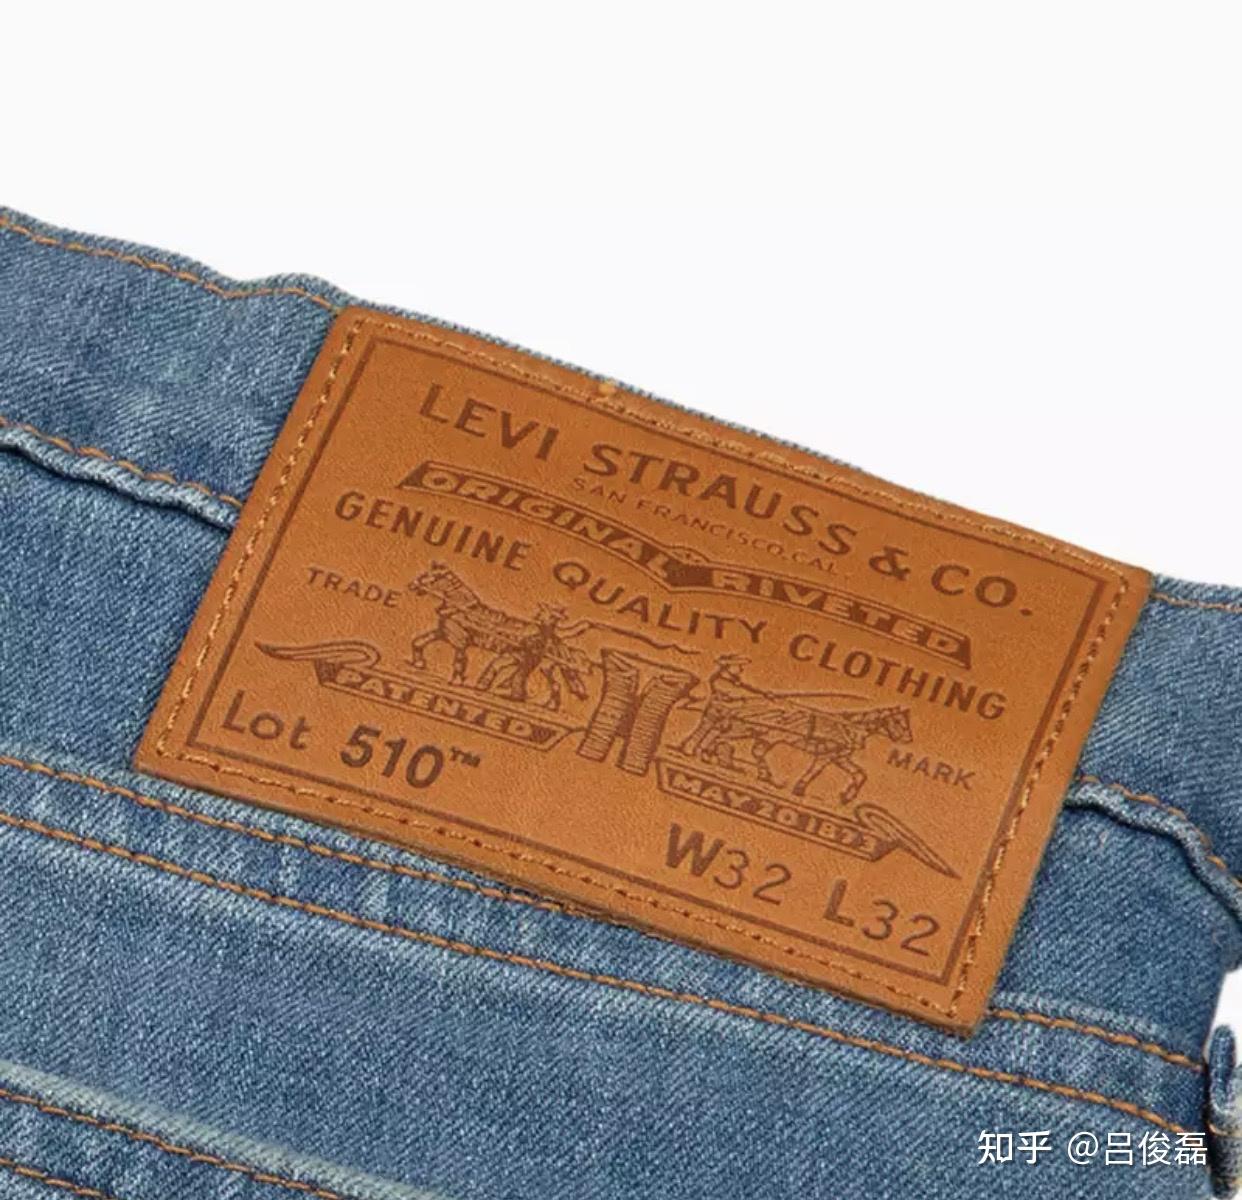 Levi's和Lee，哪个品牌牛仔裤质量好？耐穿？